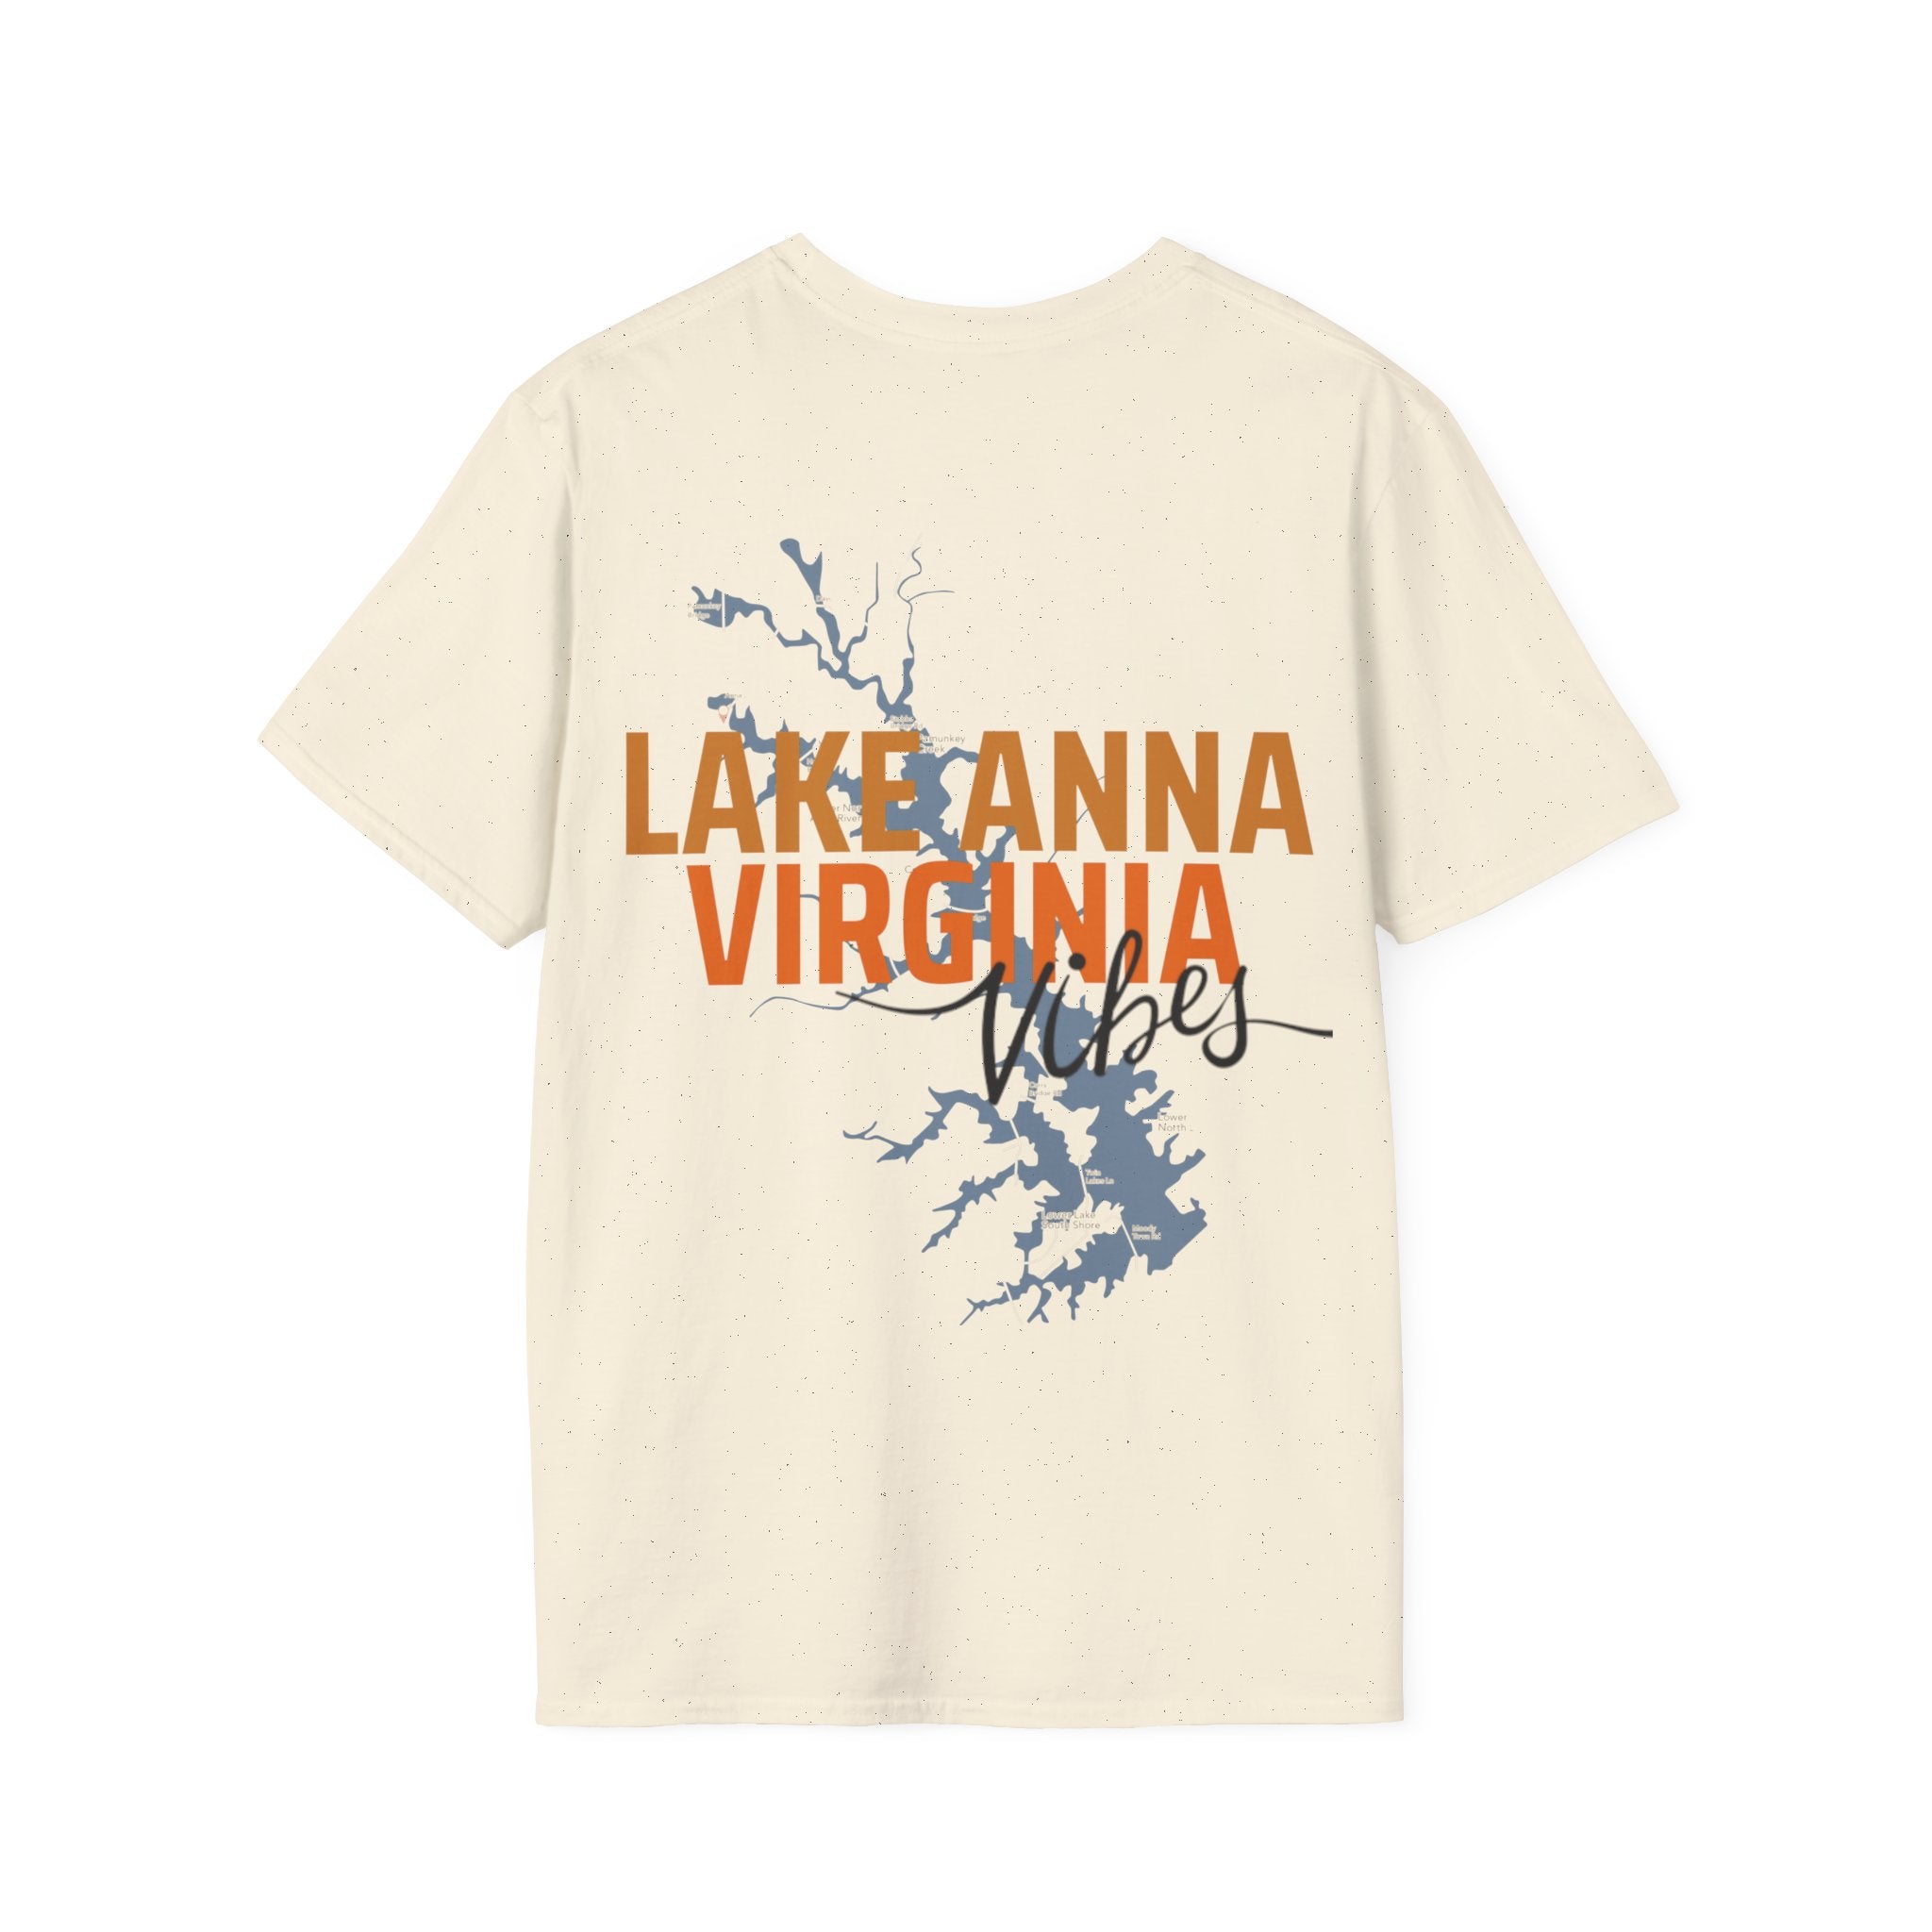 Lake Anna Vibes - Lake Anna, Virginia T-shirt